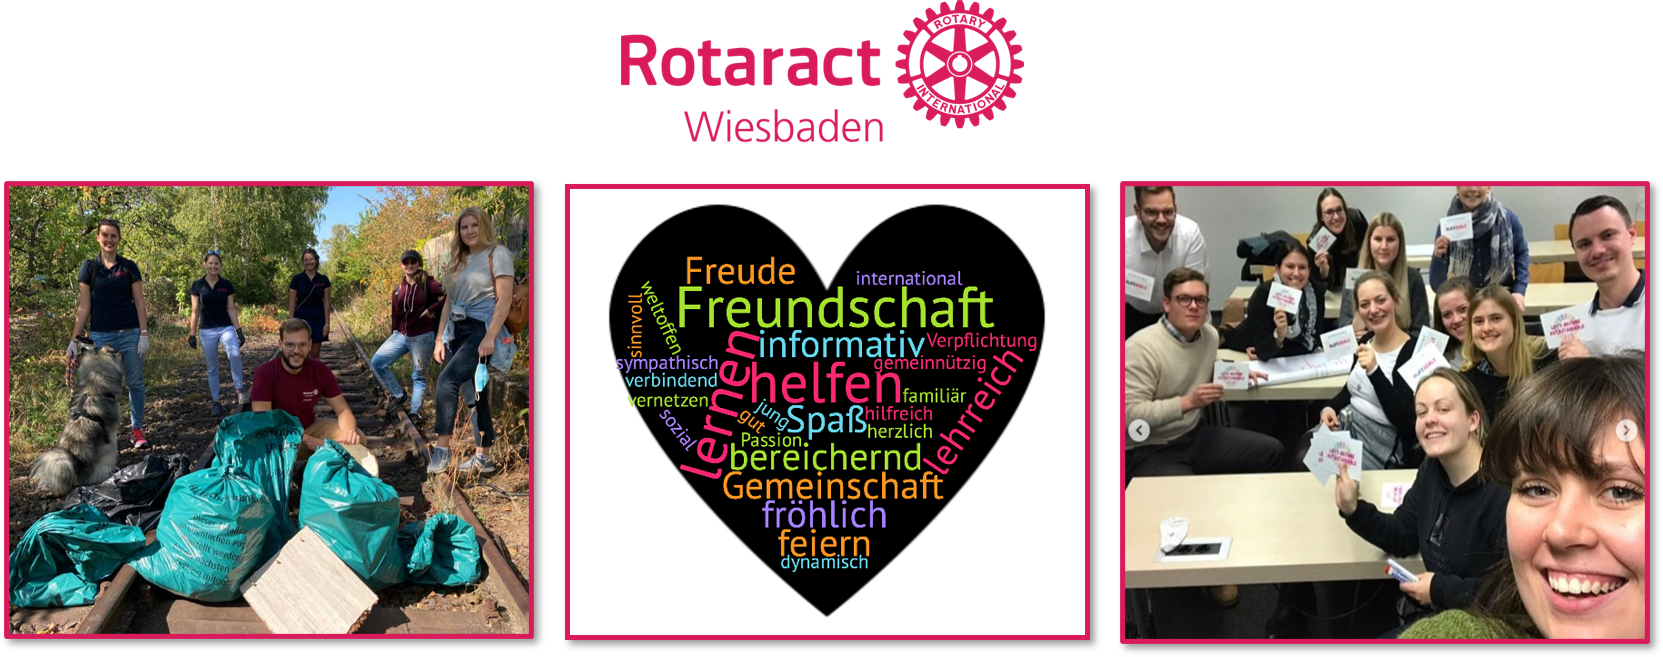 Engagement beim Rotaract Club Wiesbaden